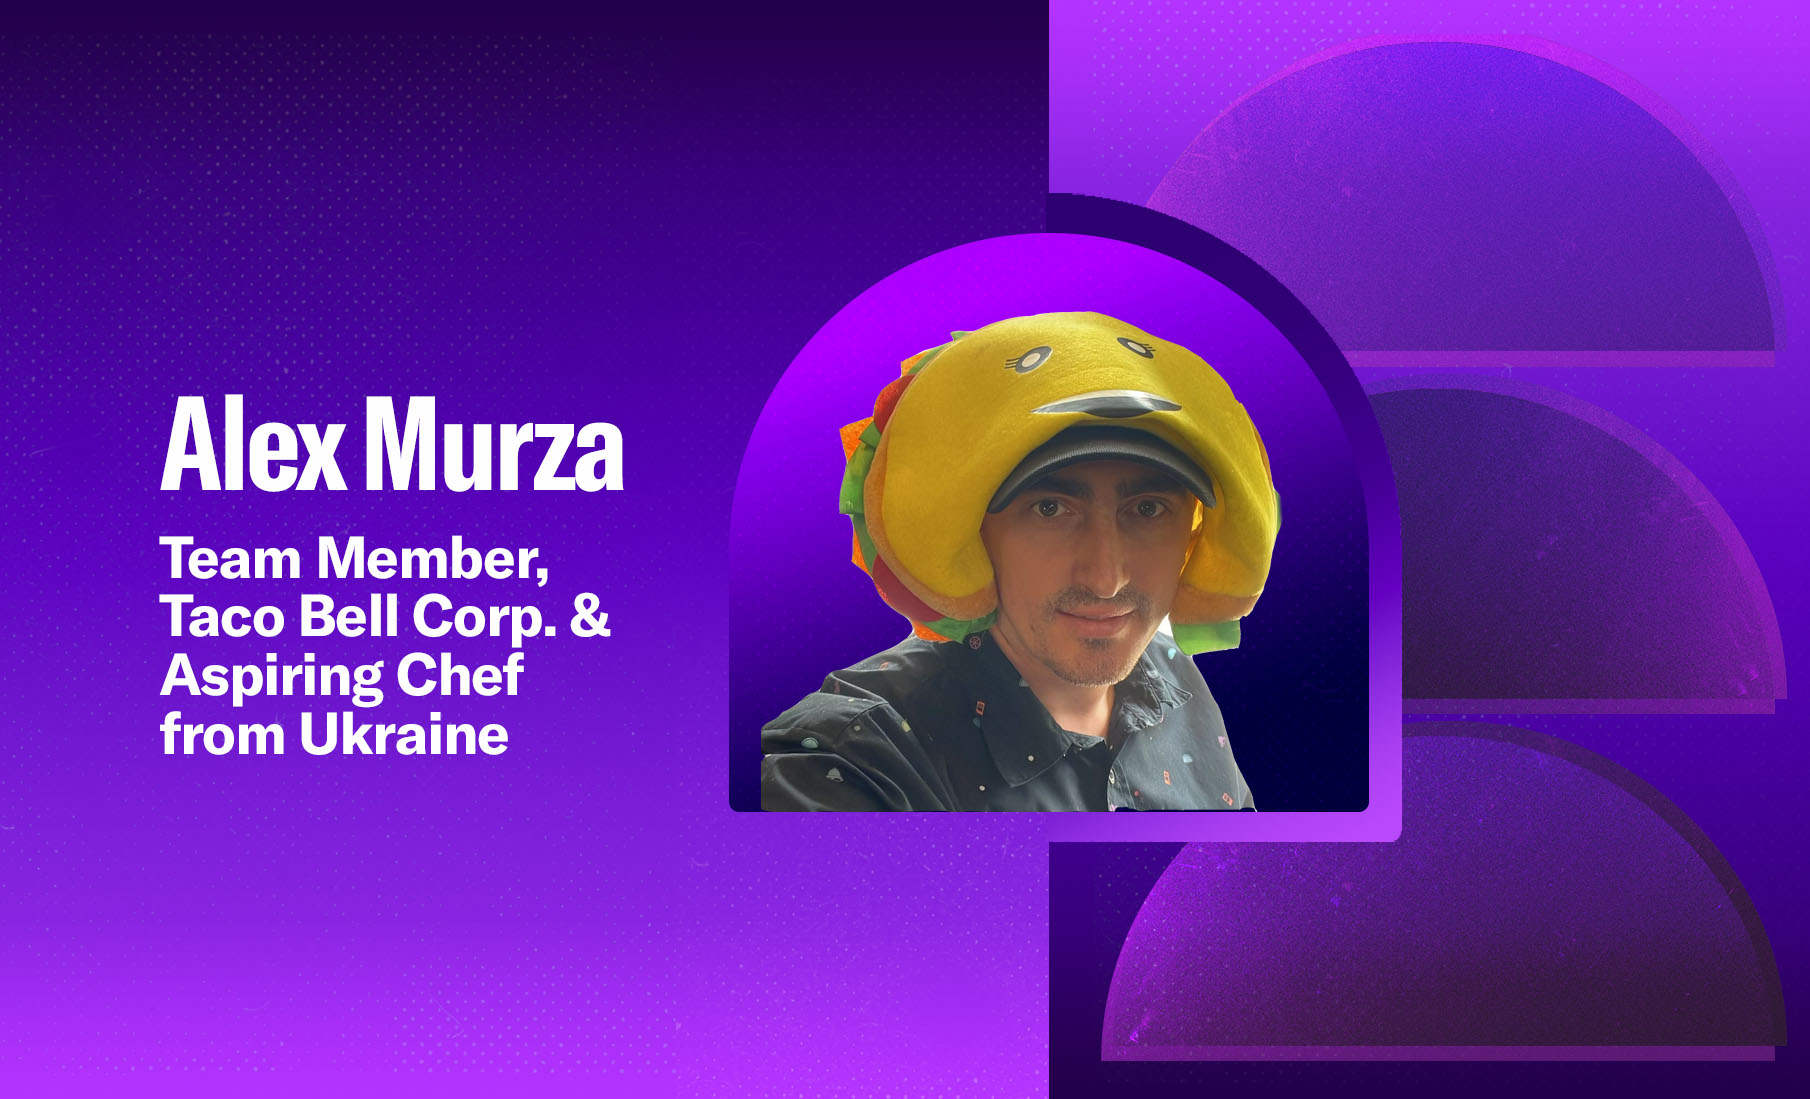 Alex Murza (he/him): Taco Bell Corporate Restaurant Team Member and Aspiring Chef from Ukraine